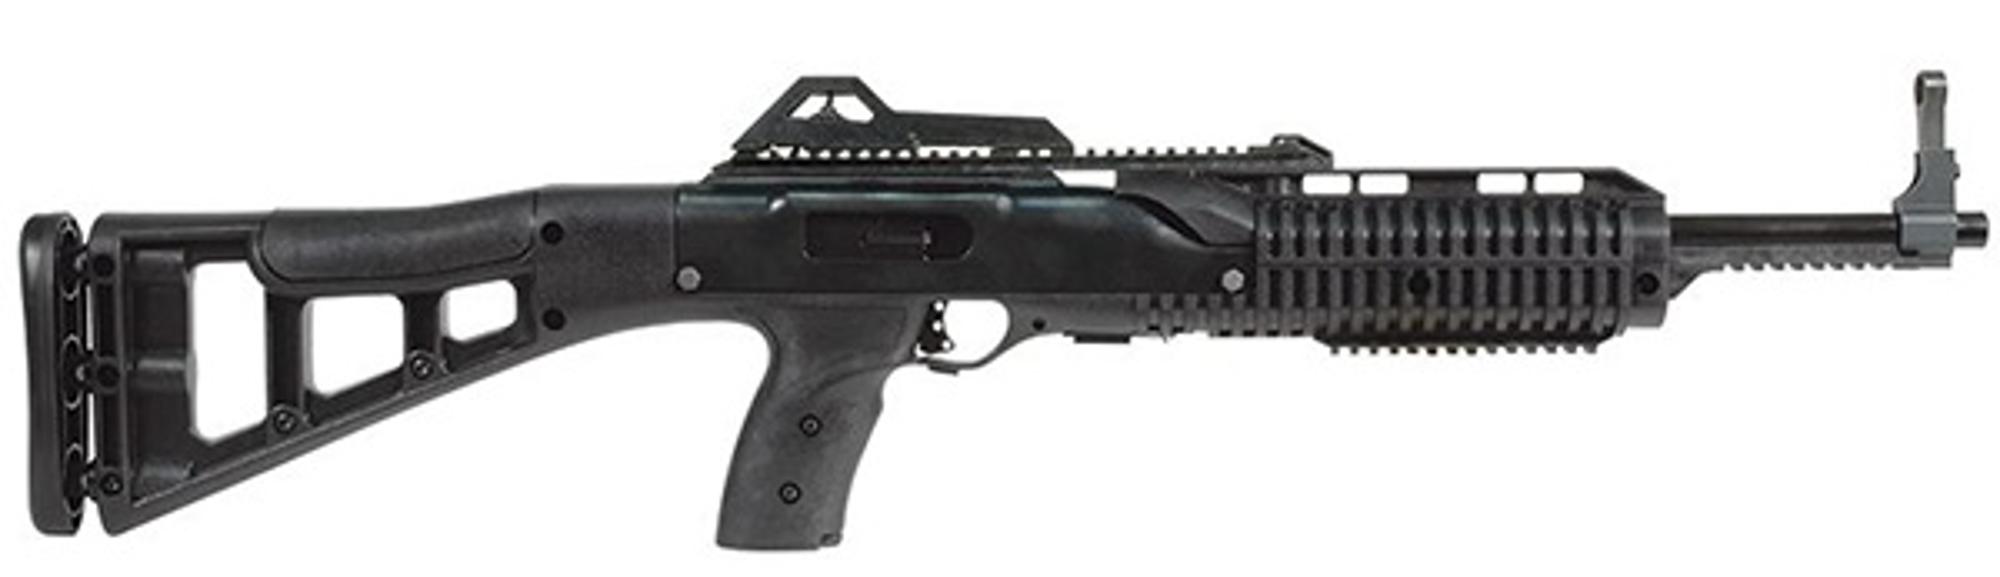 Hi-point 995 Ts 9mm Carbine